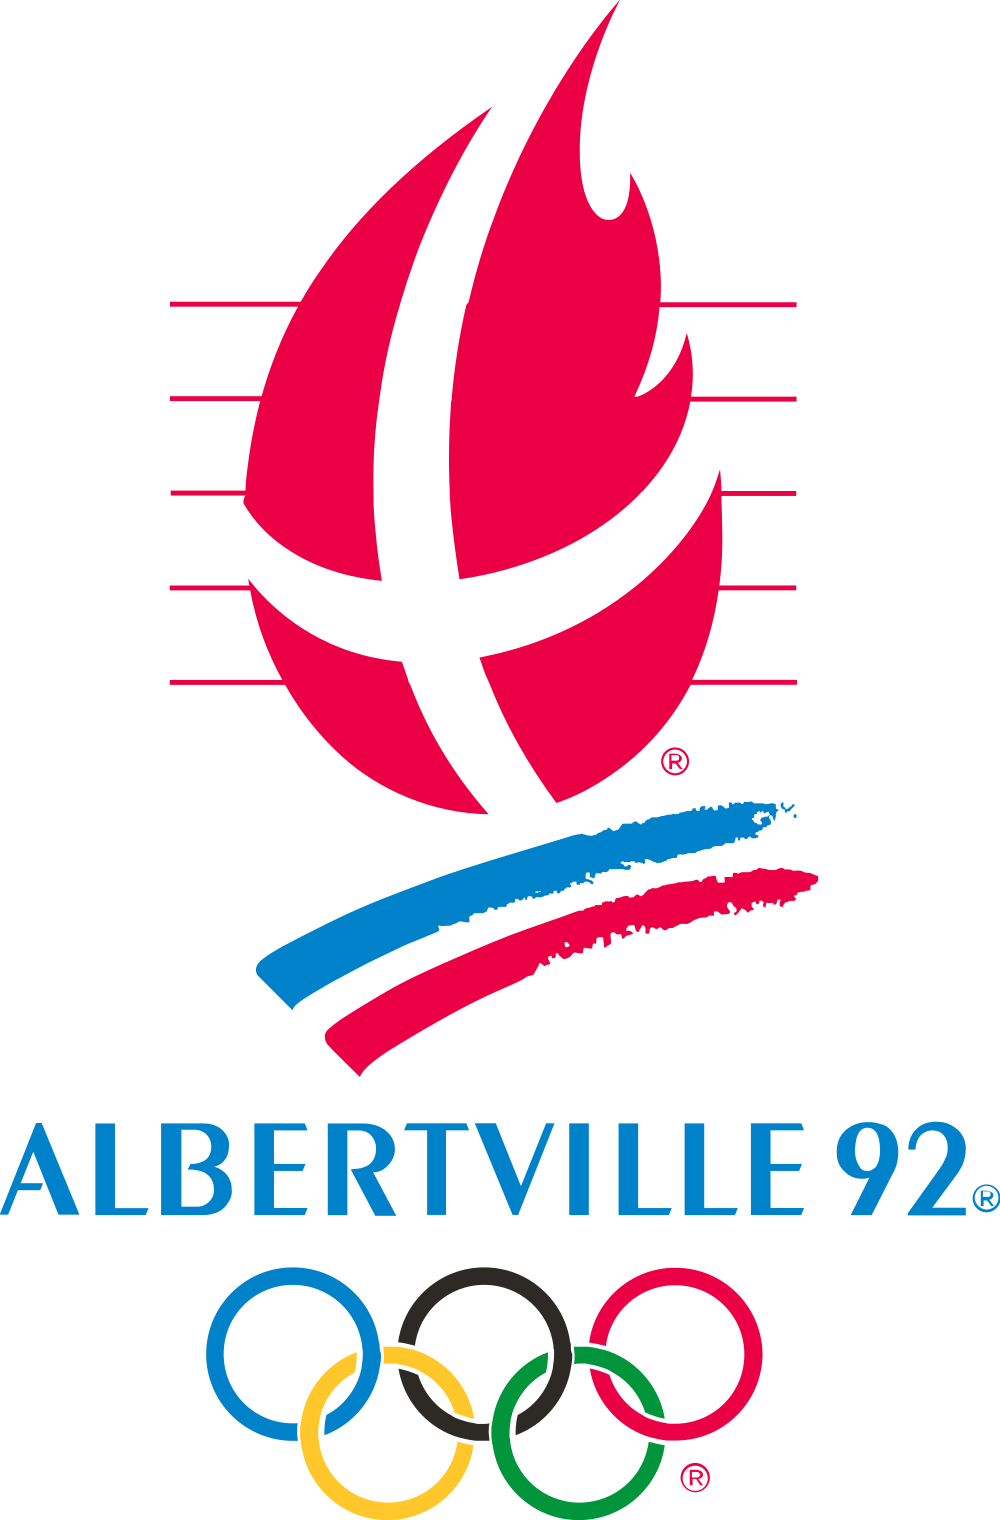 1992 Albertville Winter Olympics logo png transparent